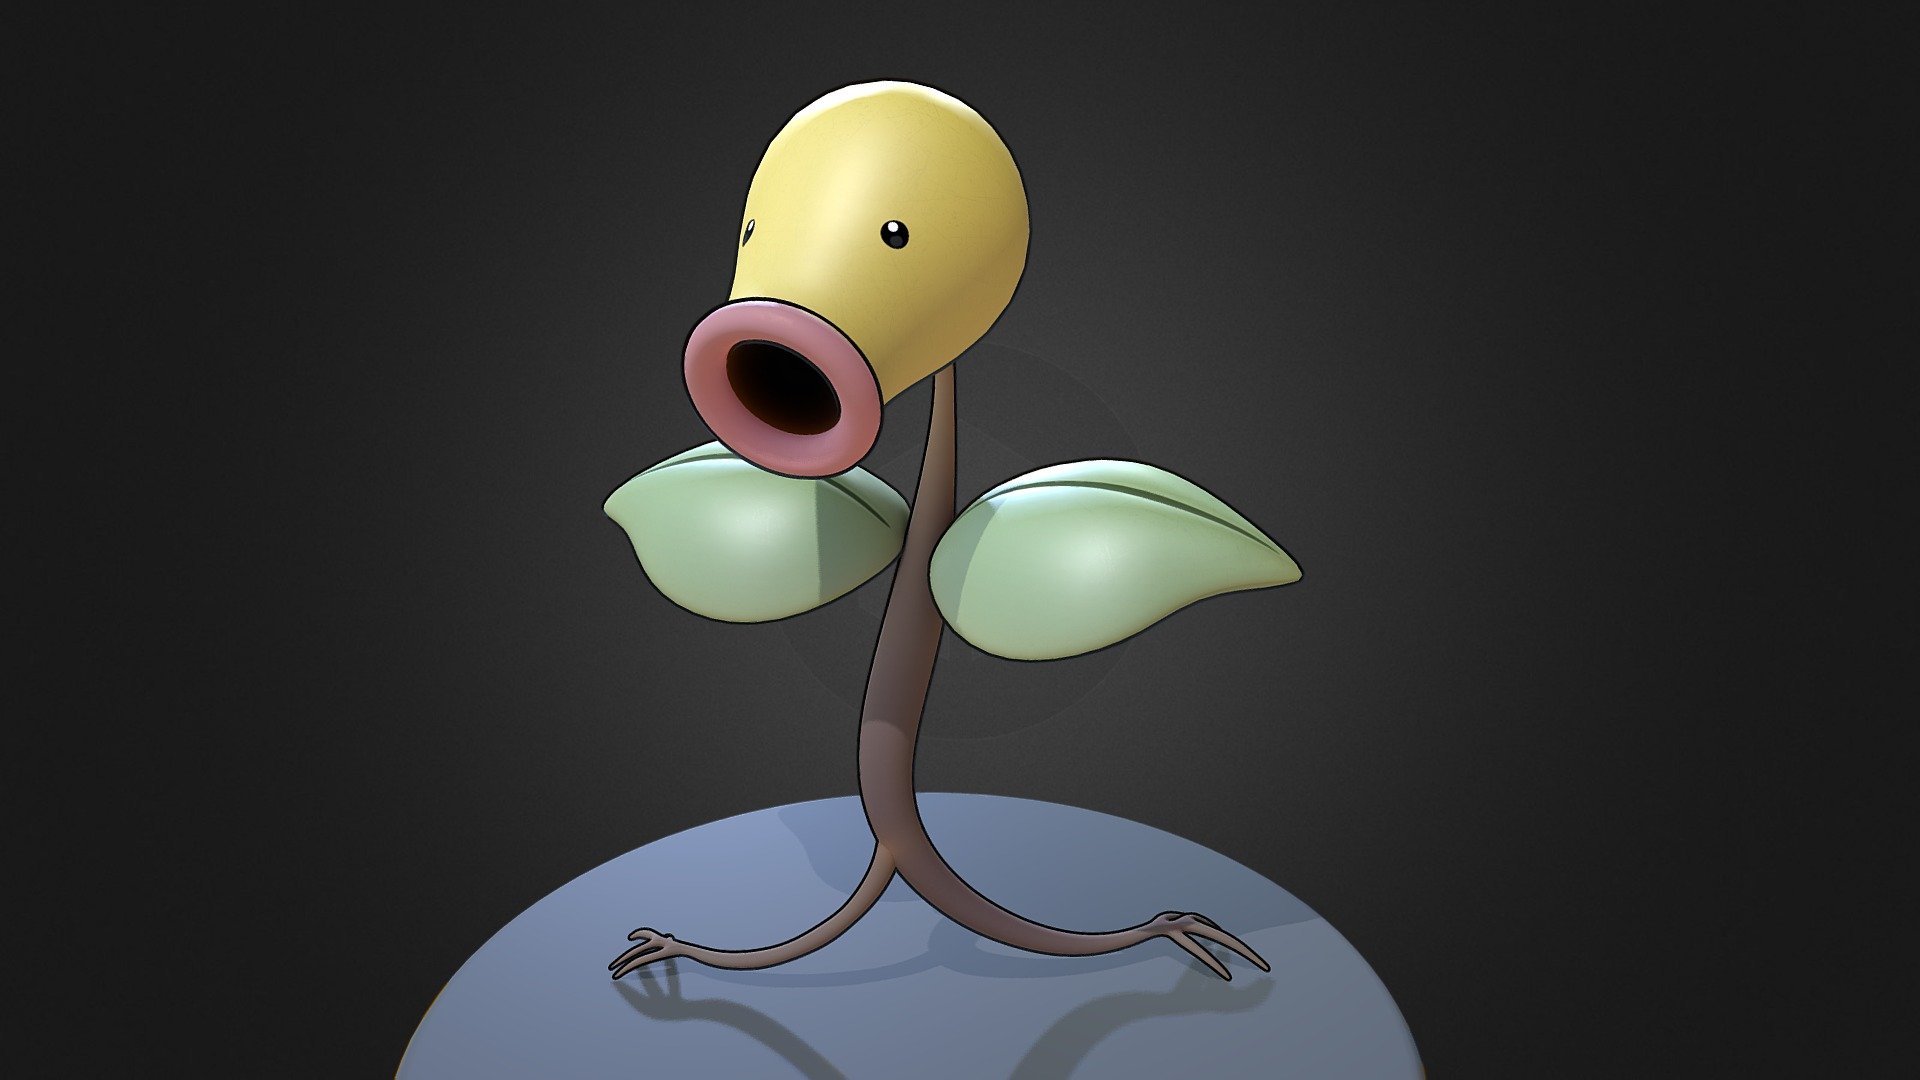 Easy one - Bellsprout Pokemon - 3D model by 3dlogicus 3d model